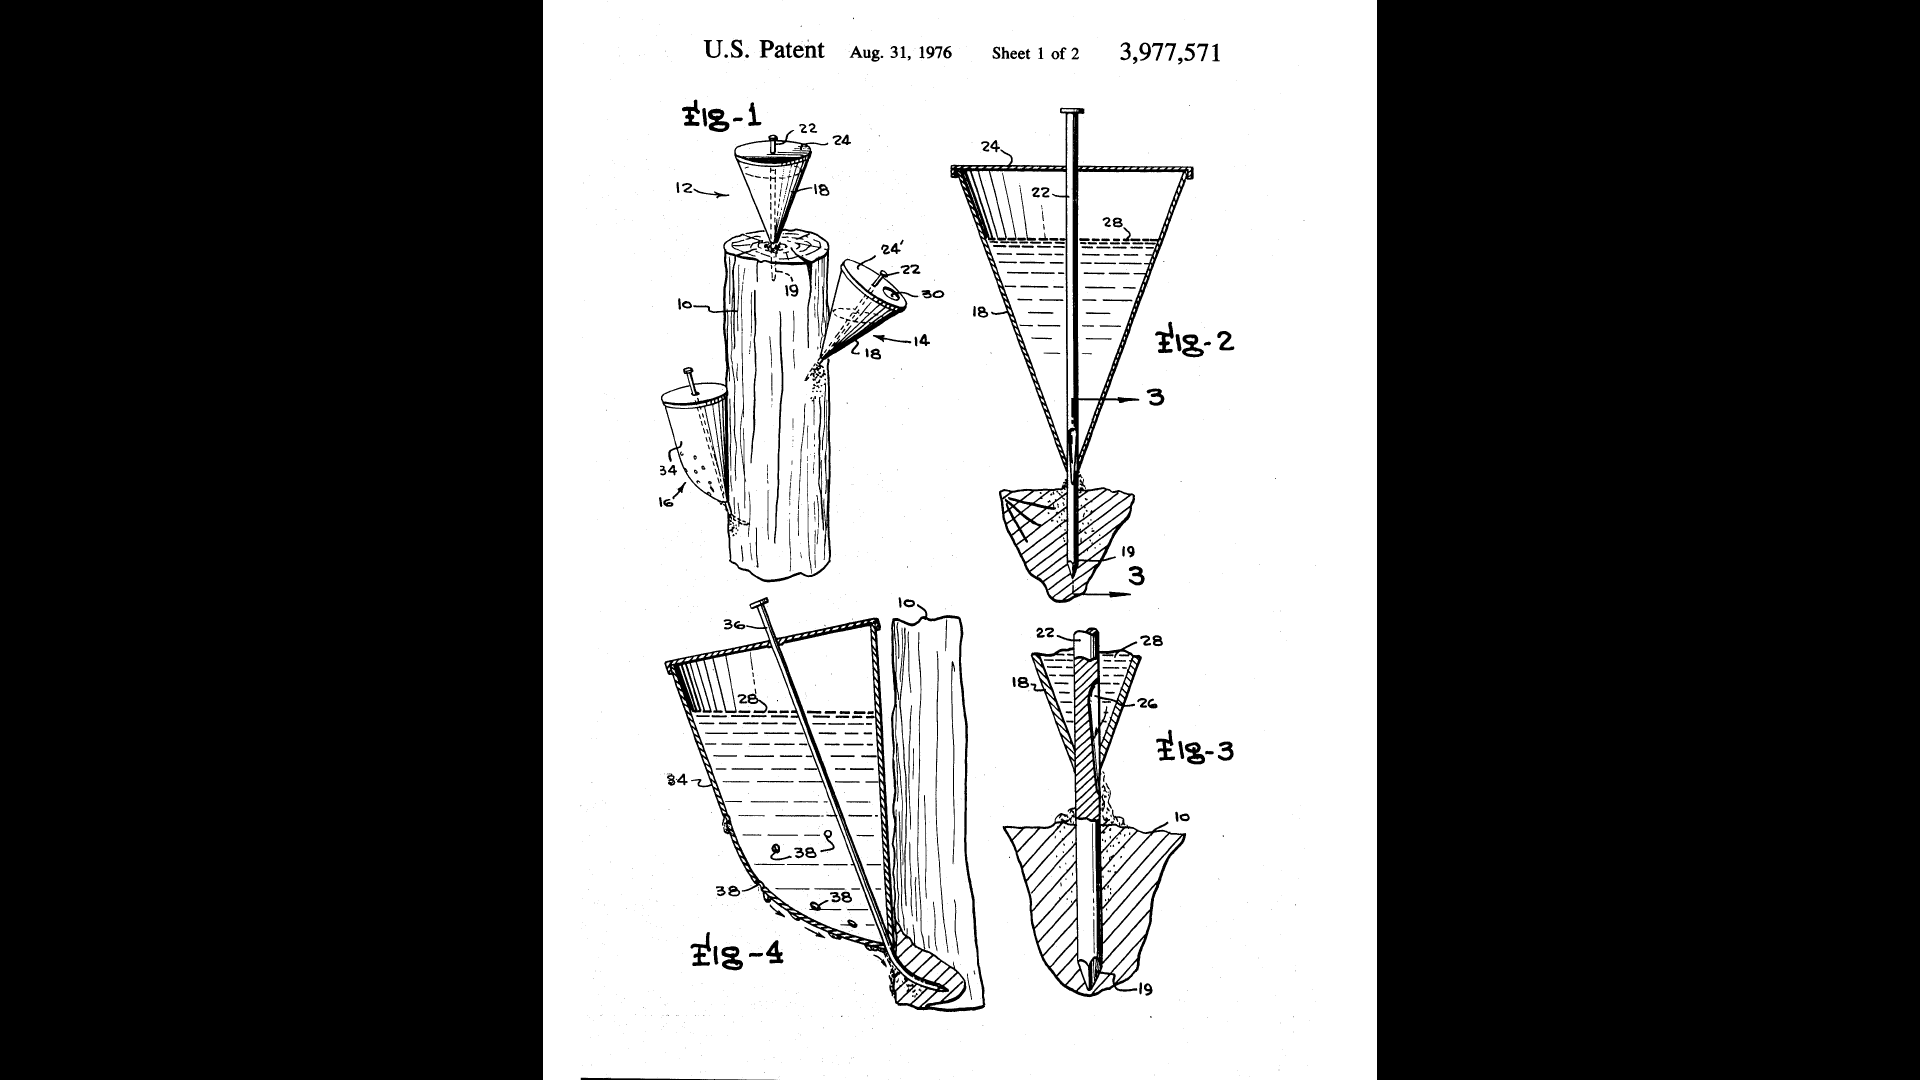 Tom Gaskins Patent No. 3,977,571